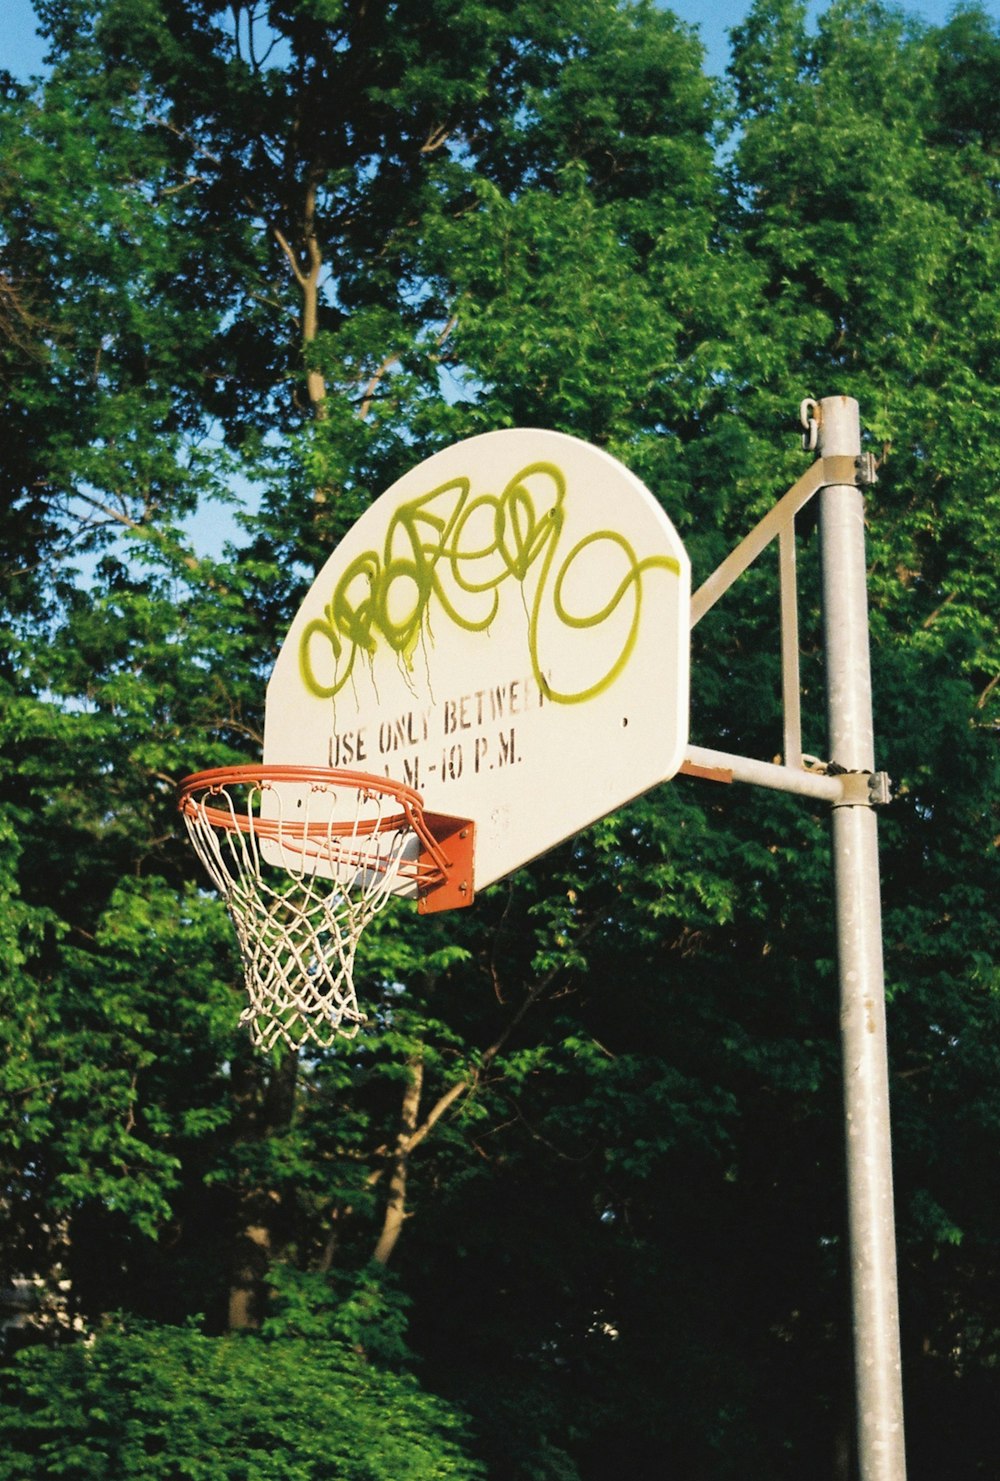 a basketball hoop with graffiti written on it